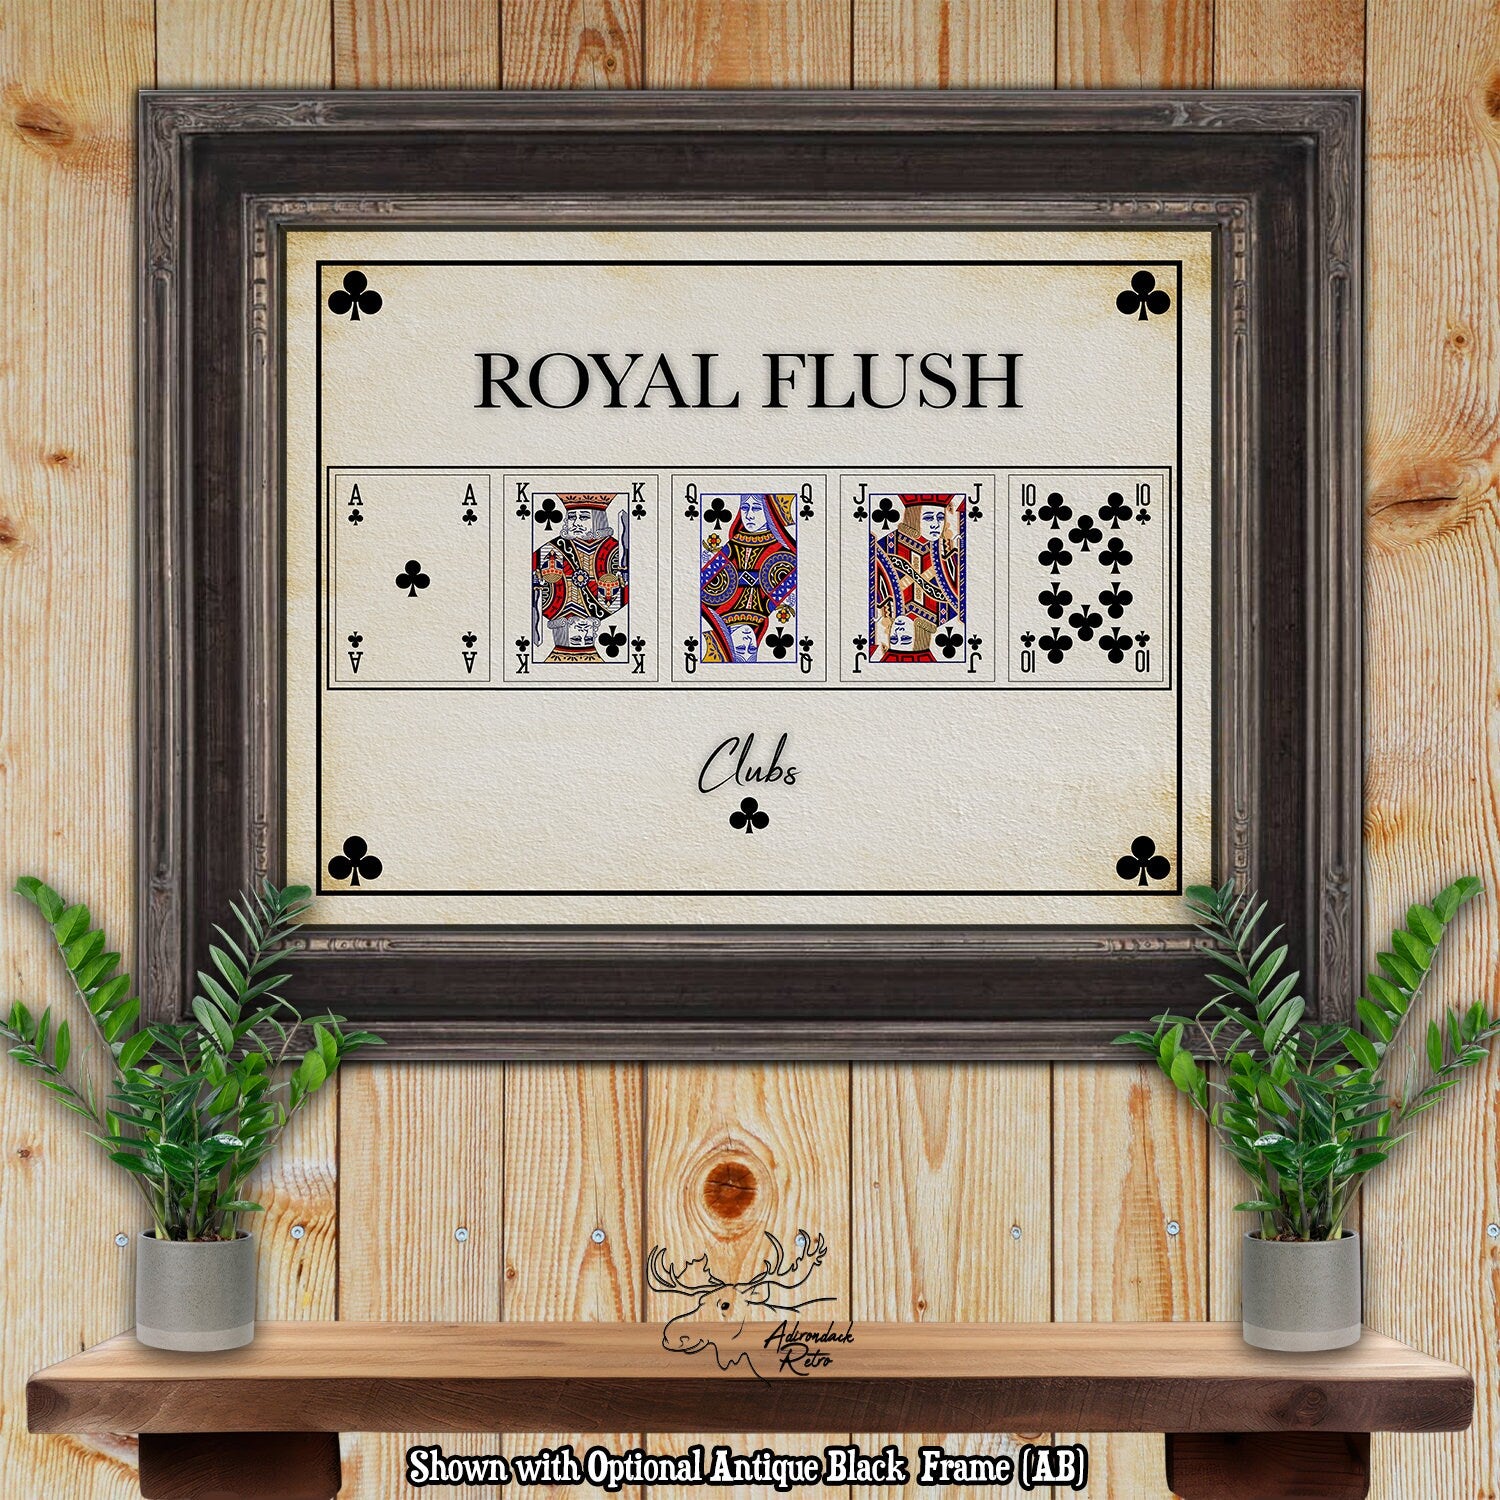 Clubs Royal Flush Poker Hand Art Print at Adirondack Retro